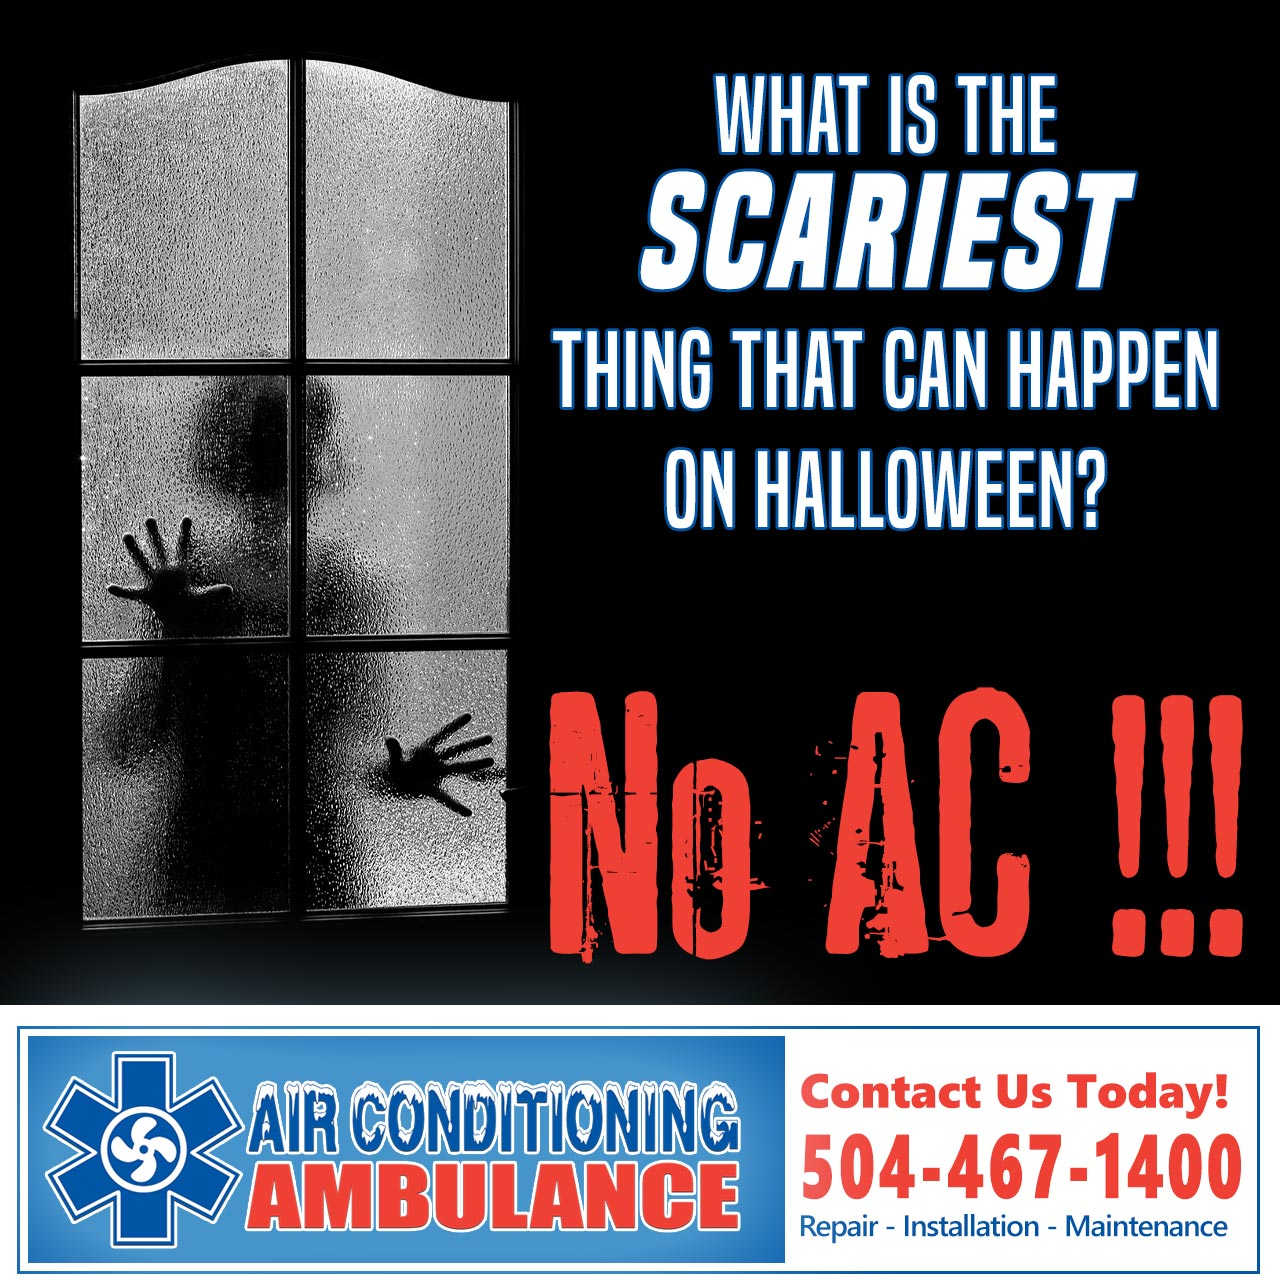 AC Ambulanace - Scariest thing on Halloween - Halloween Social Media Posts